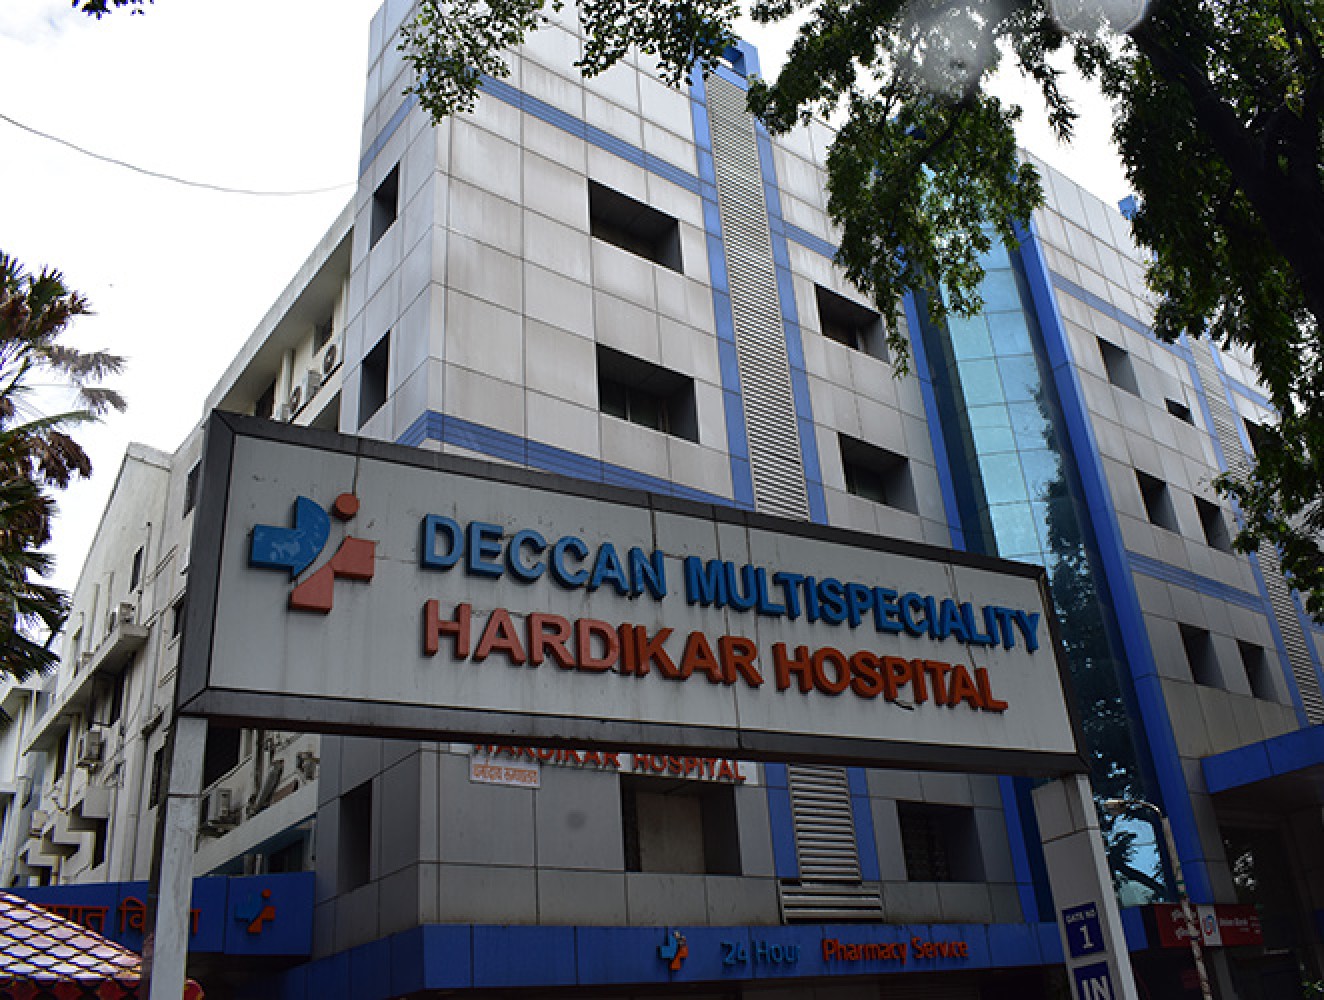 Deccan Hardikar Hospital (Sushrut Medical Care And Research Society) Pune Shivajinagar